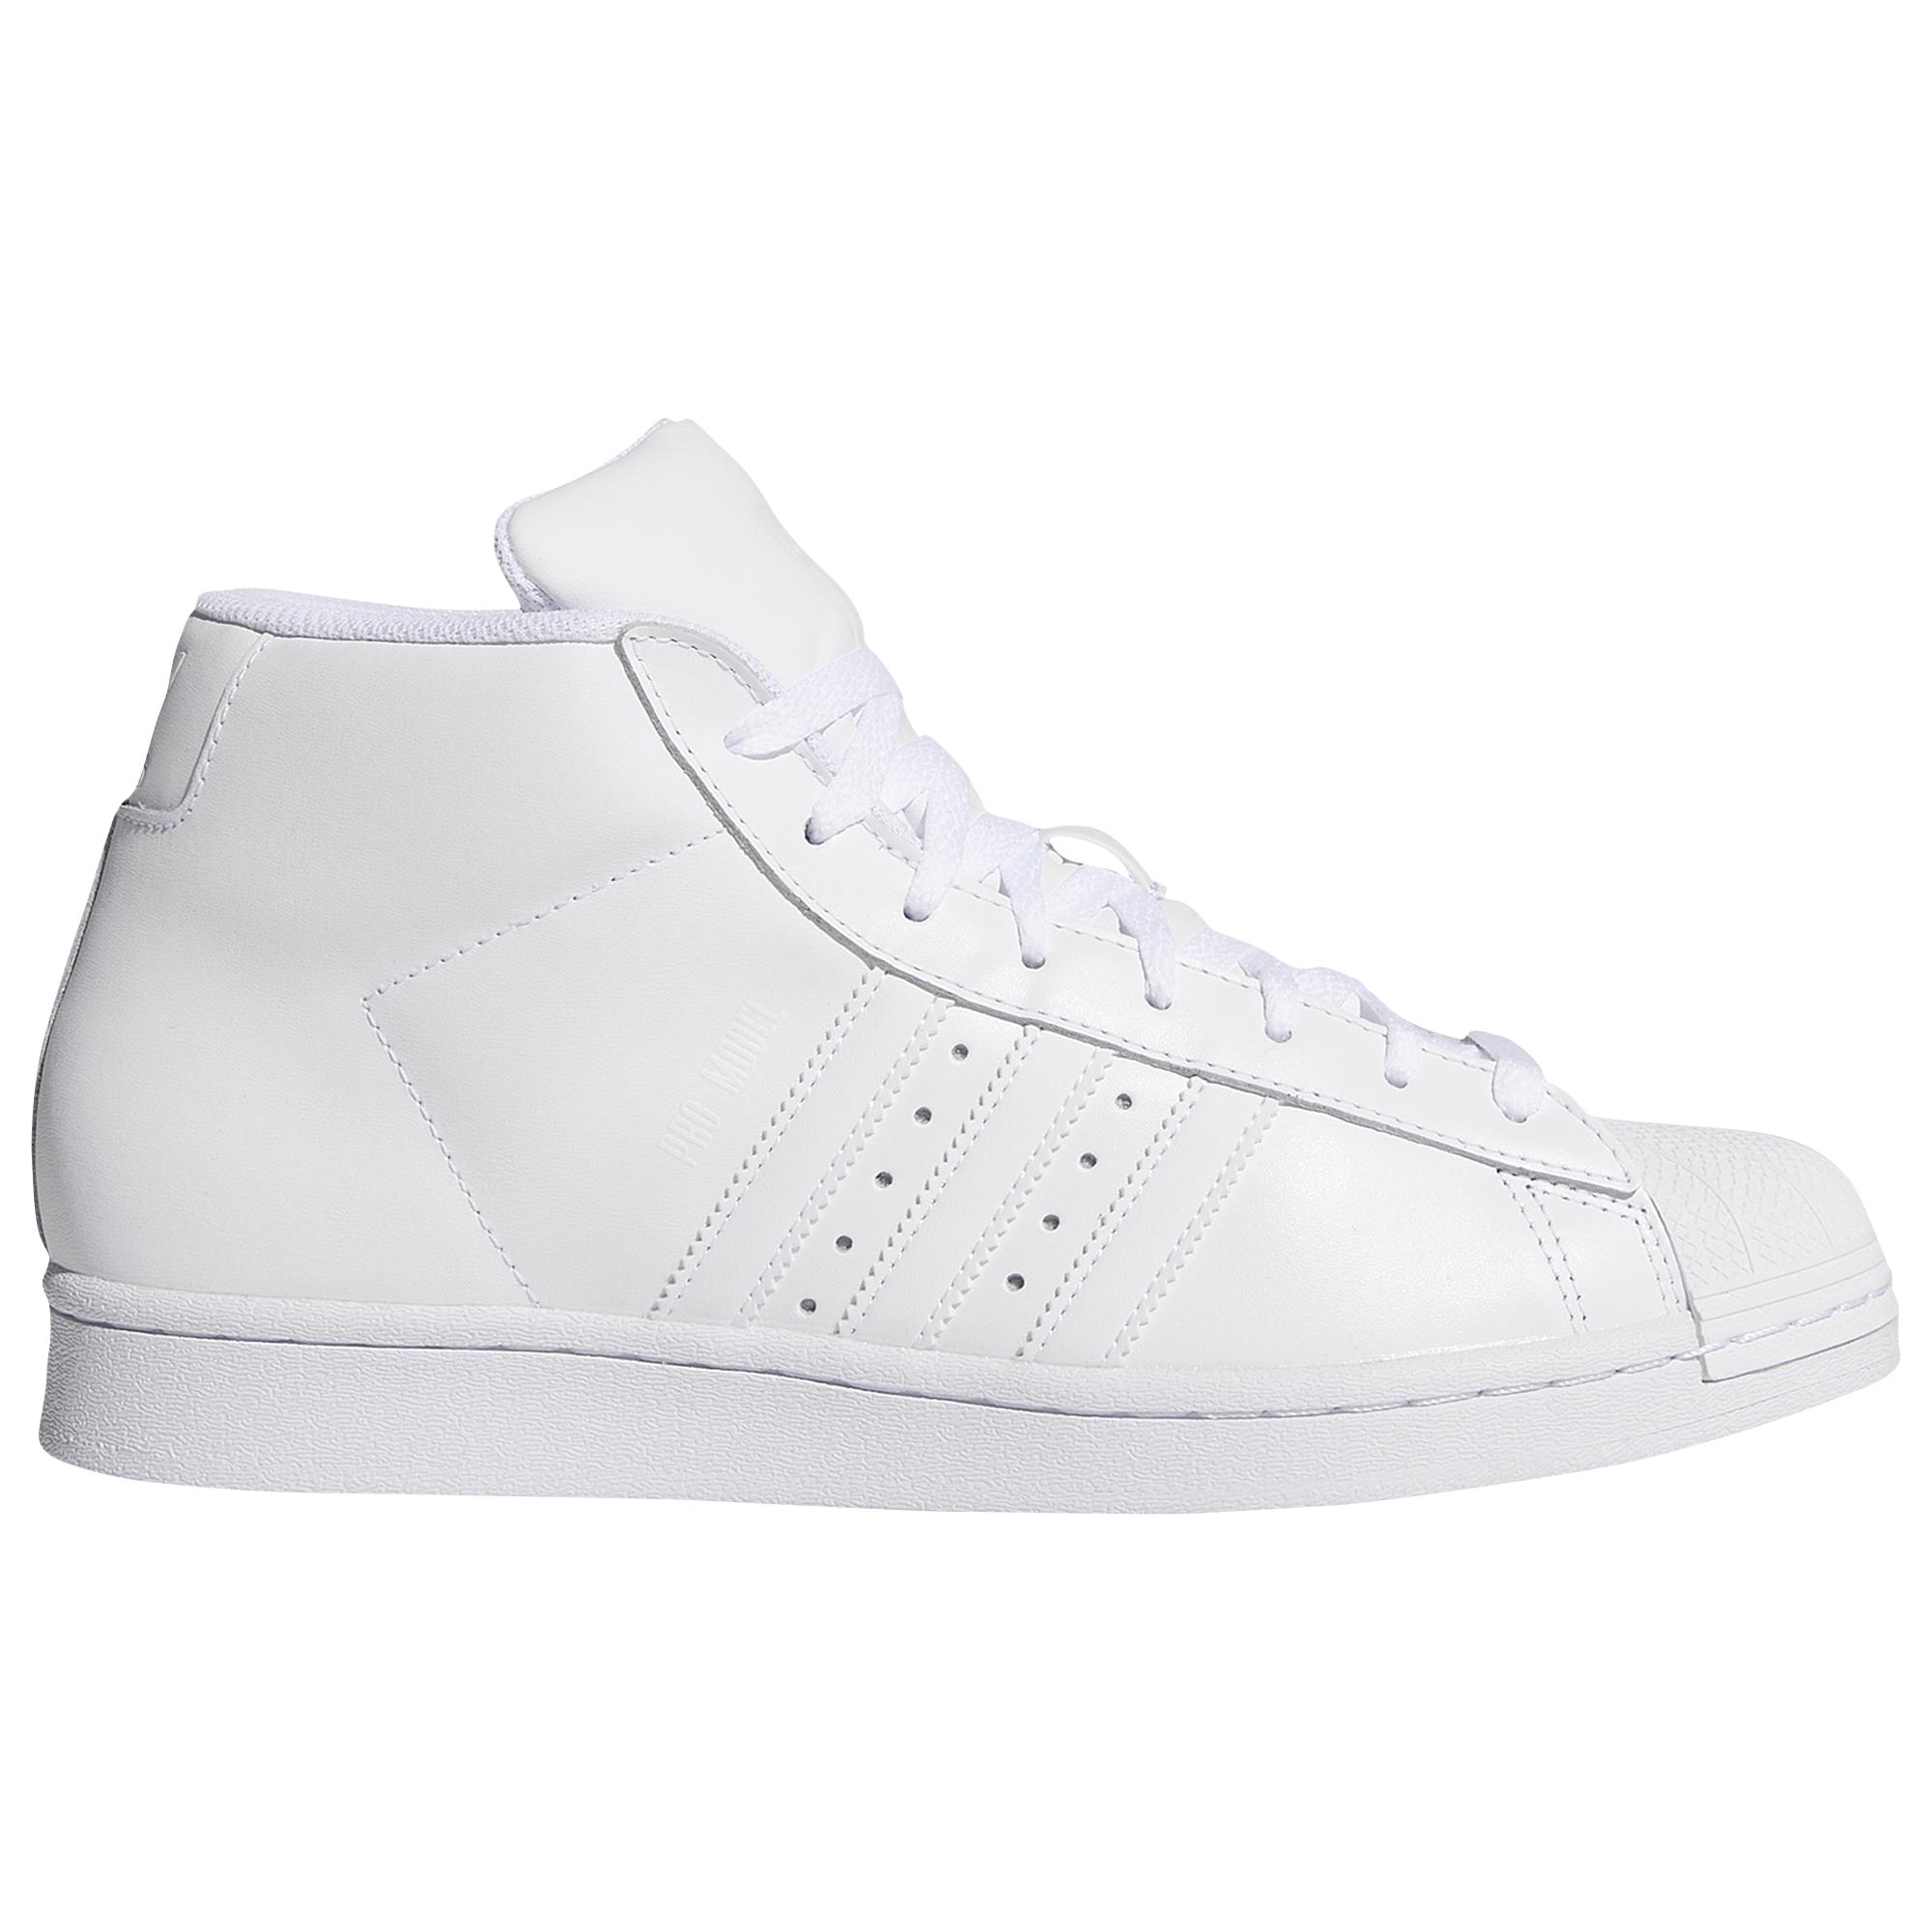 adidas Originals Pro Model - Shoes in White/White/White (White) for Men ...